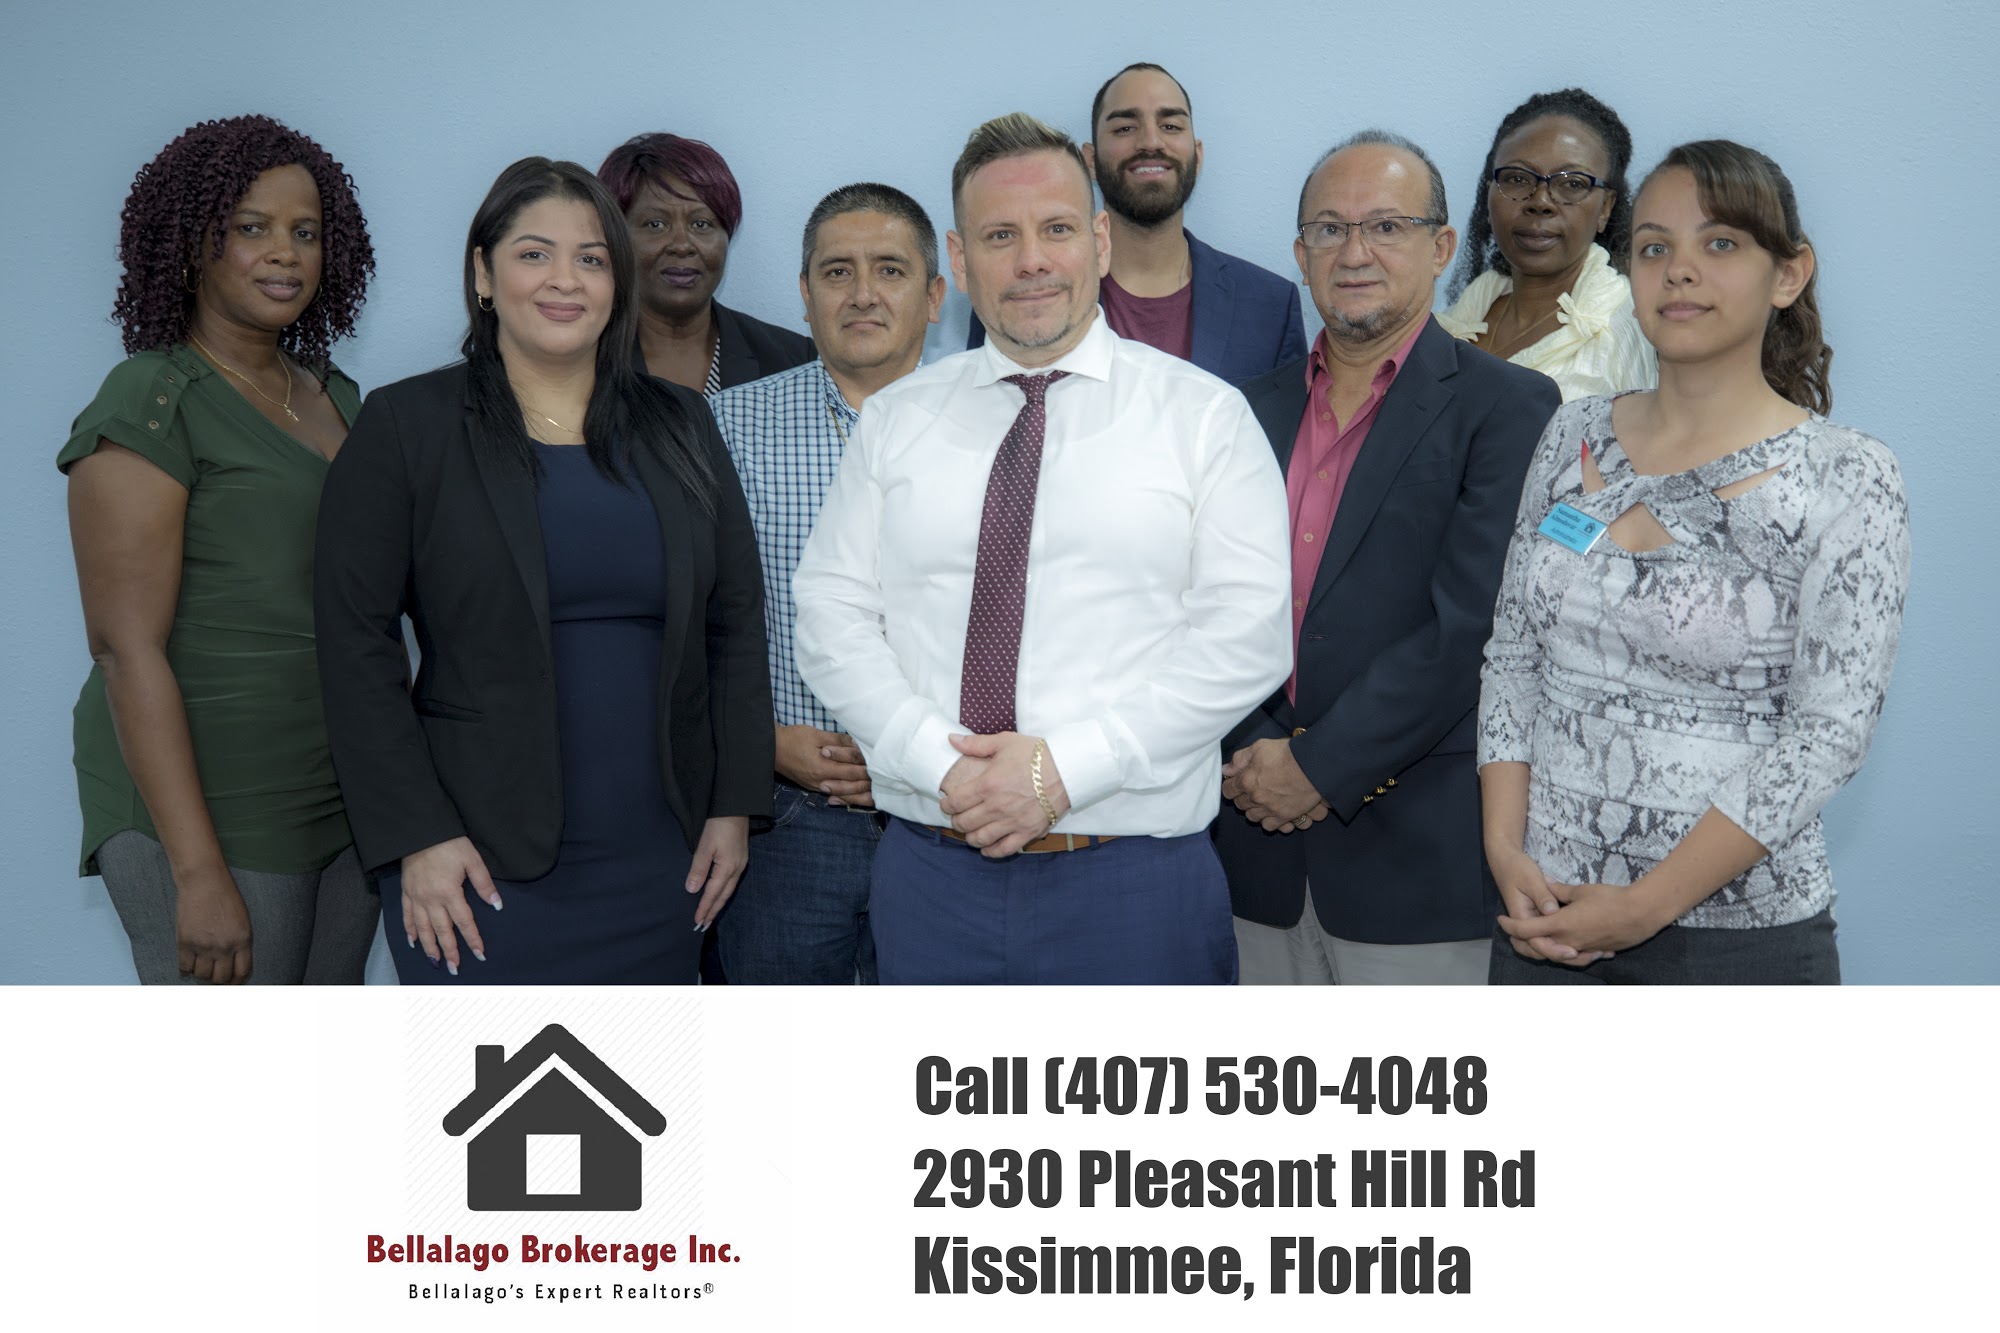 George Almodovar, Bellalago Real Estate Agent & Brokerage Inc.-Kissimmee, FL